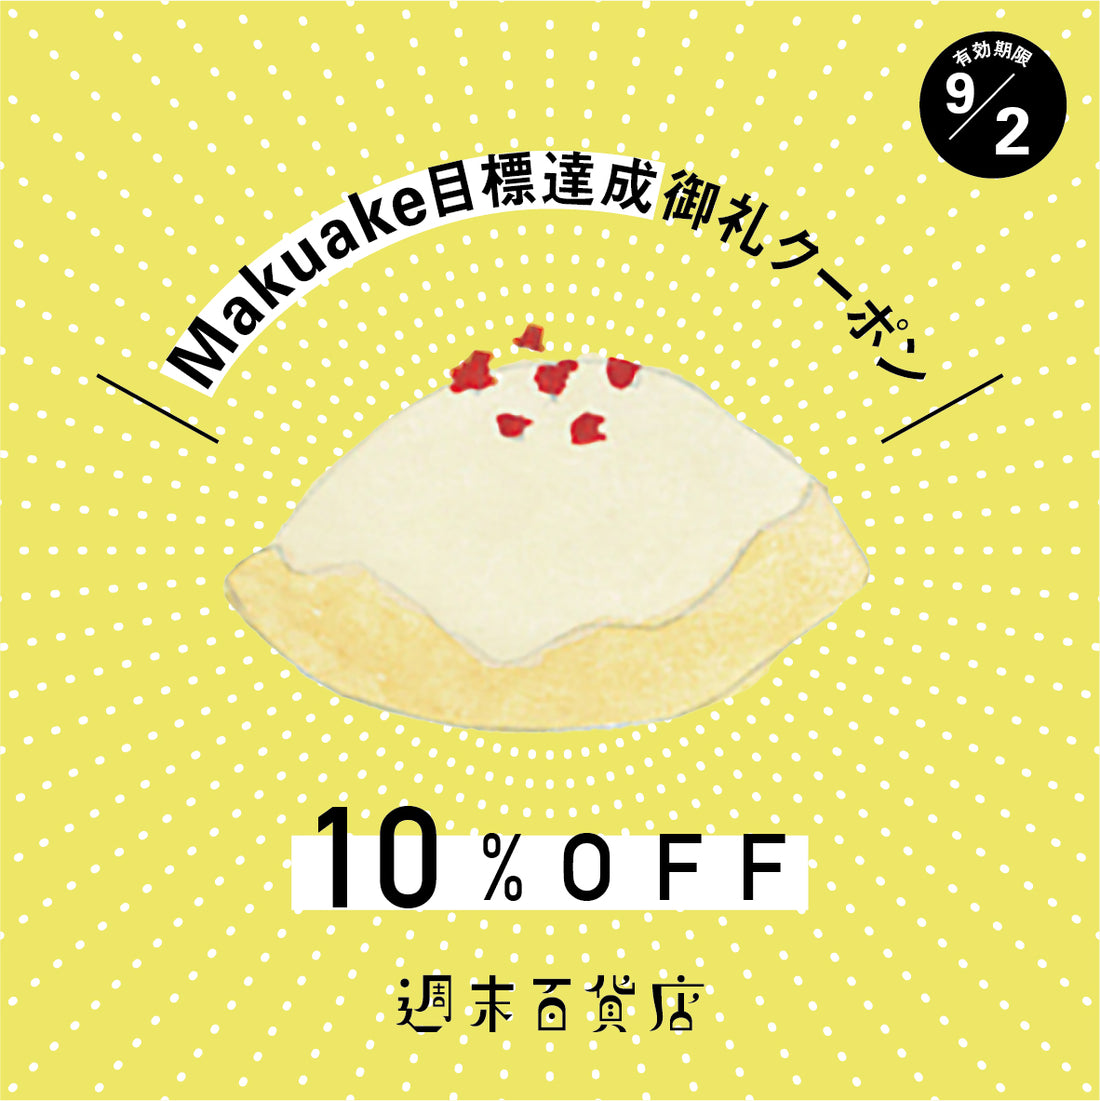 Makuake達成キャンペーン!!10%OFFクーポン配布